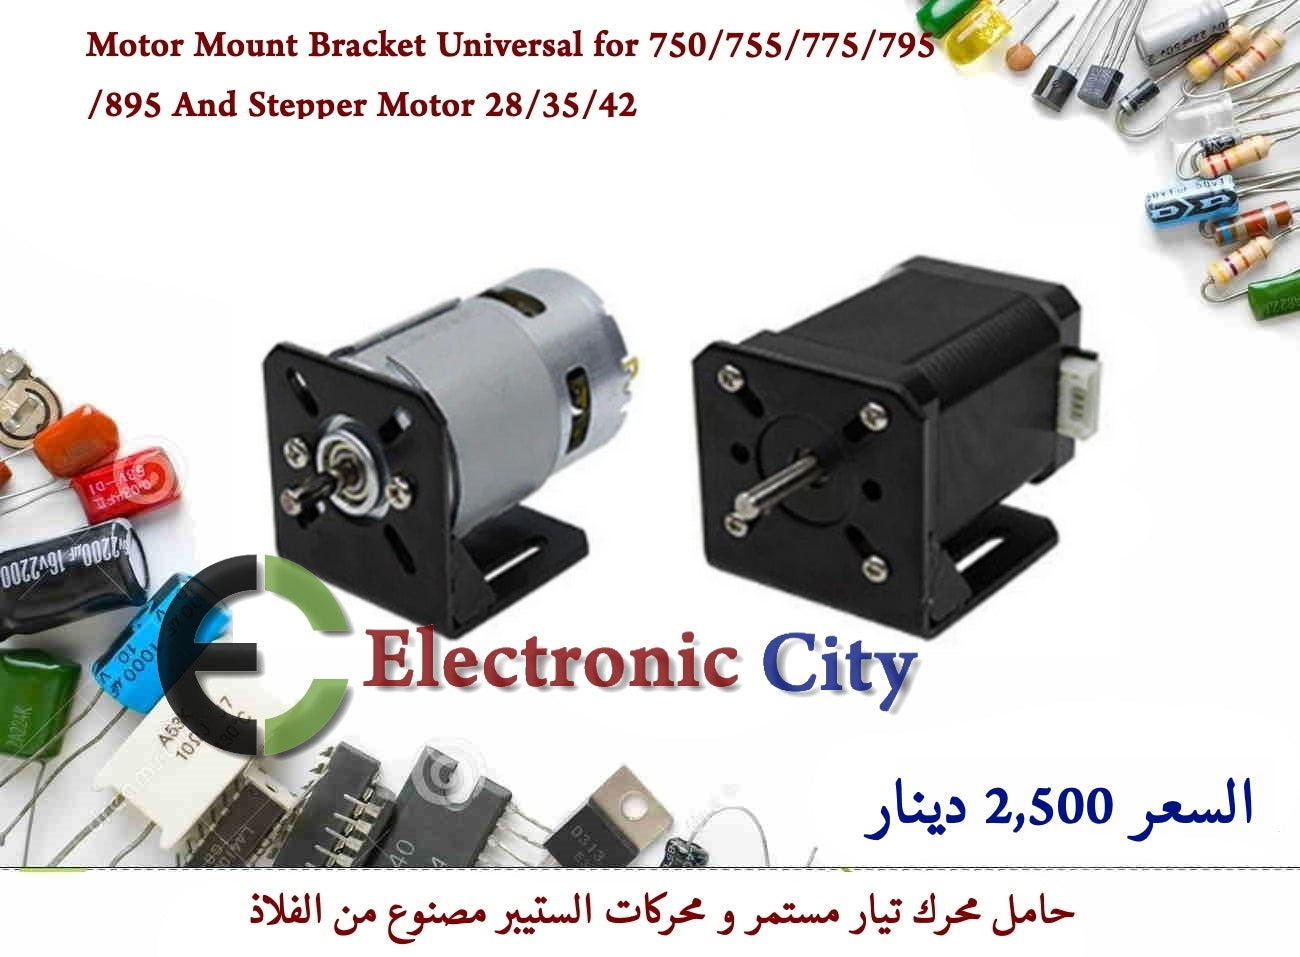 Motor Mount Bracket Universal for 750/755/775/795/895 And Stepper Motor 28/35/42